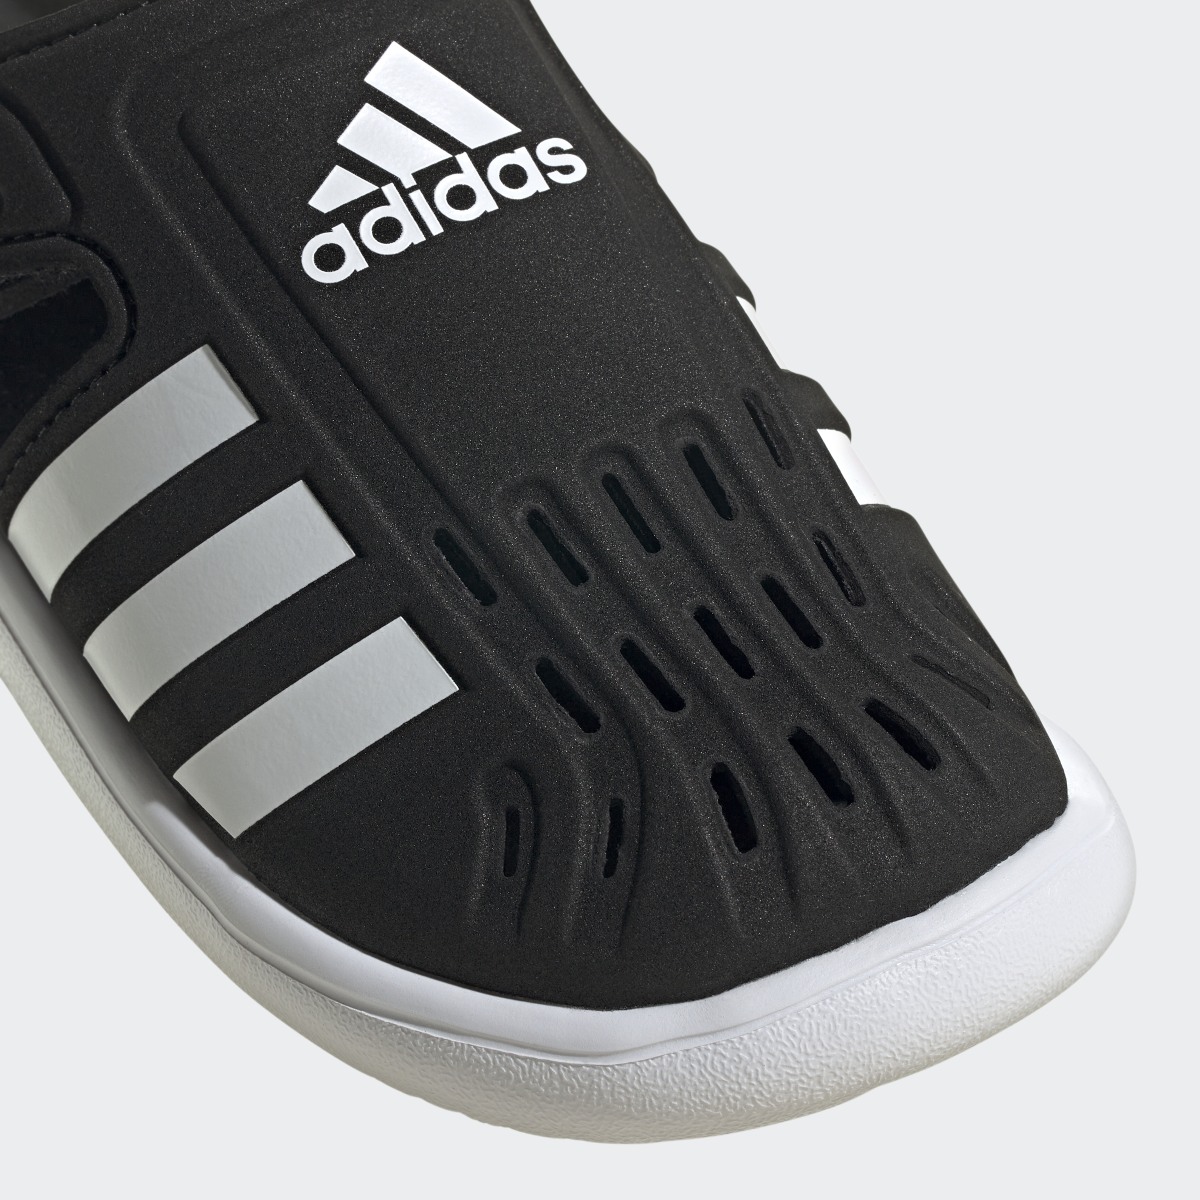 Adidas Summer Closed Toe Water Sandals. 9